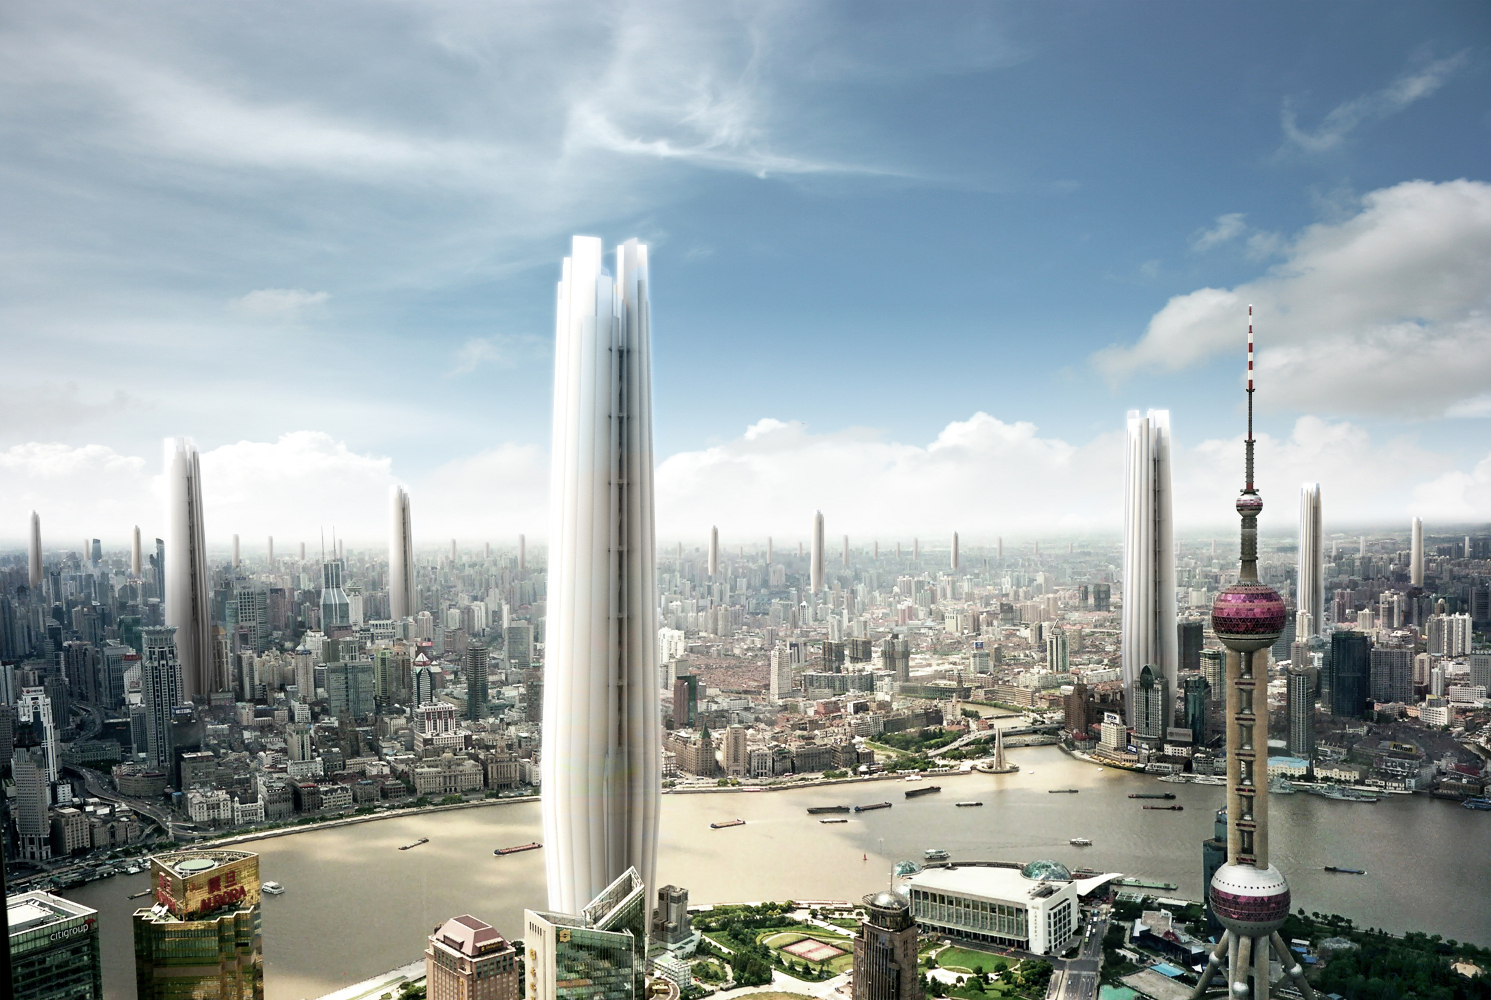 Vision of Shanghai in 2050